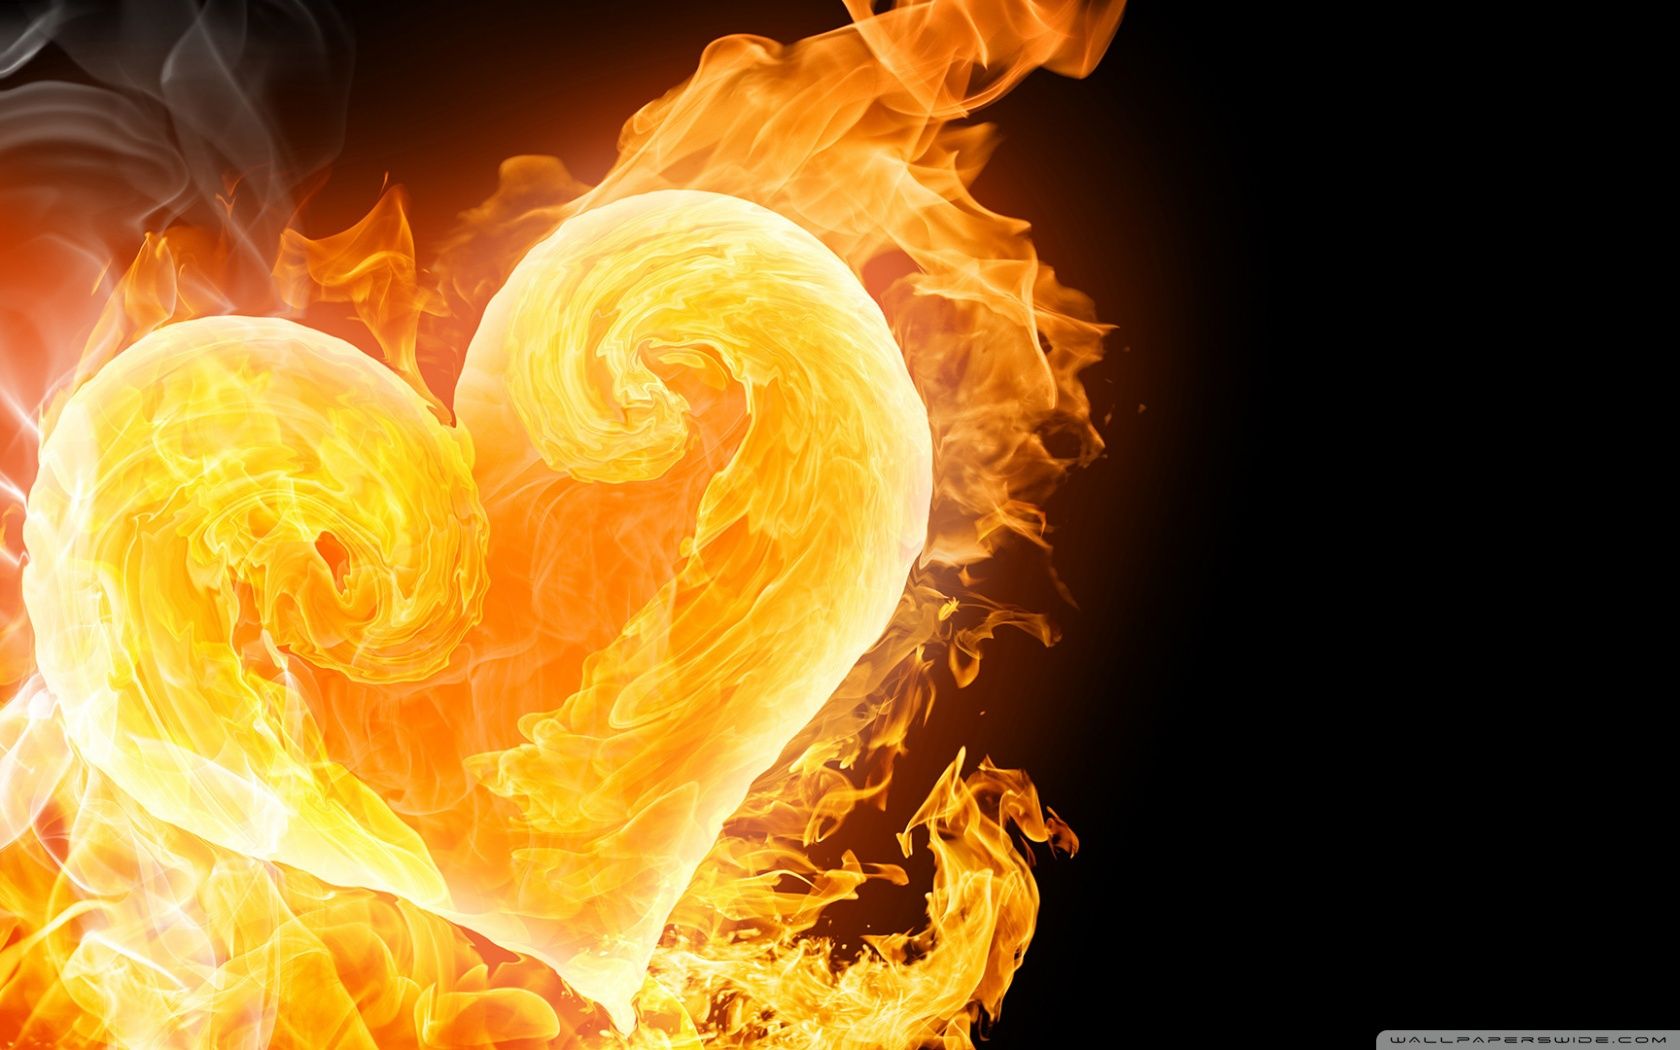 Amazing Flaming Heart Ultra HD Desktop .wallpaperwide.com